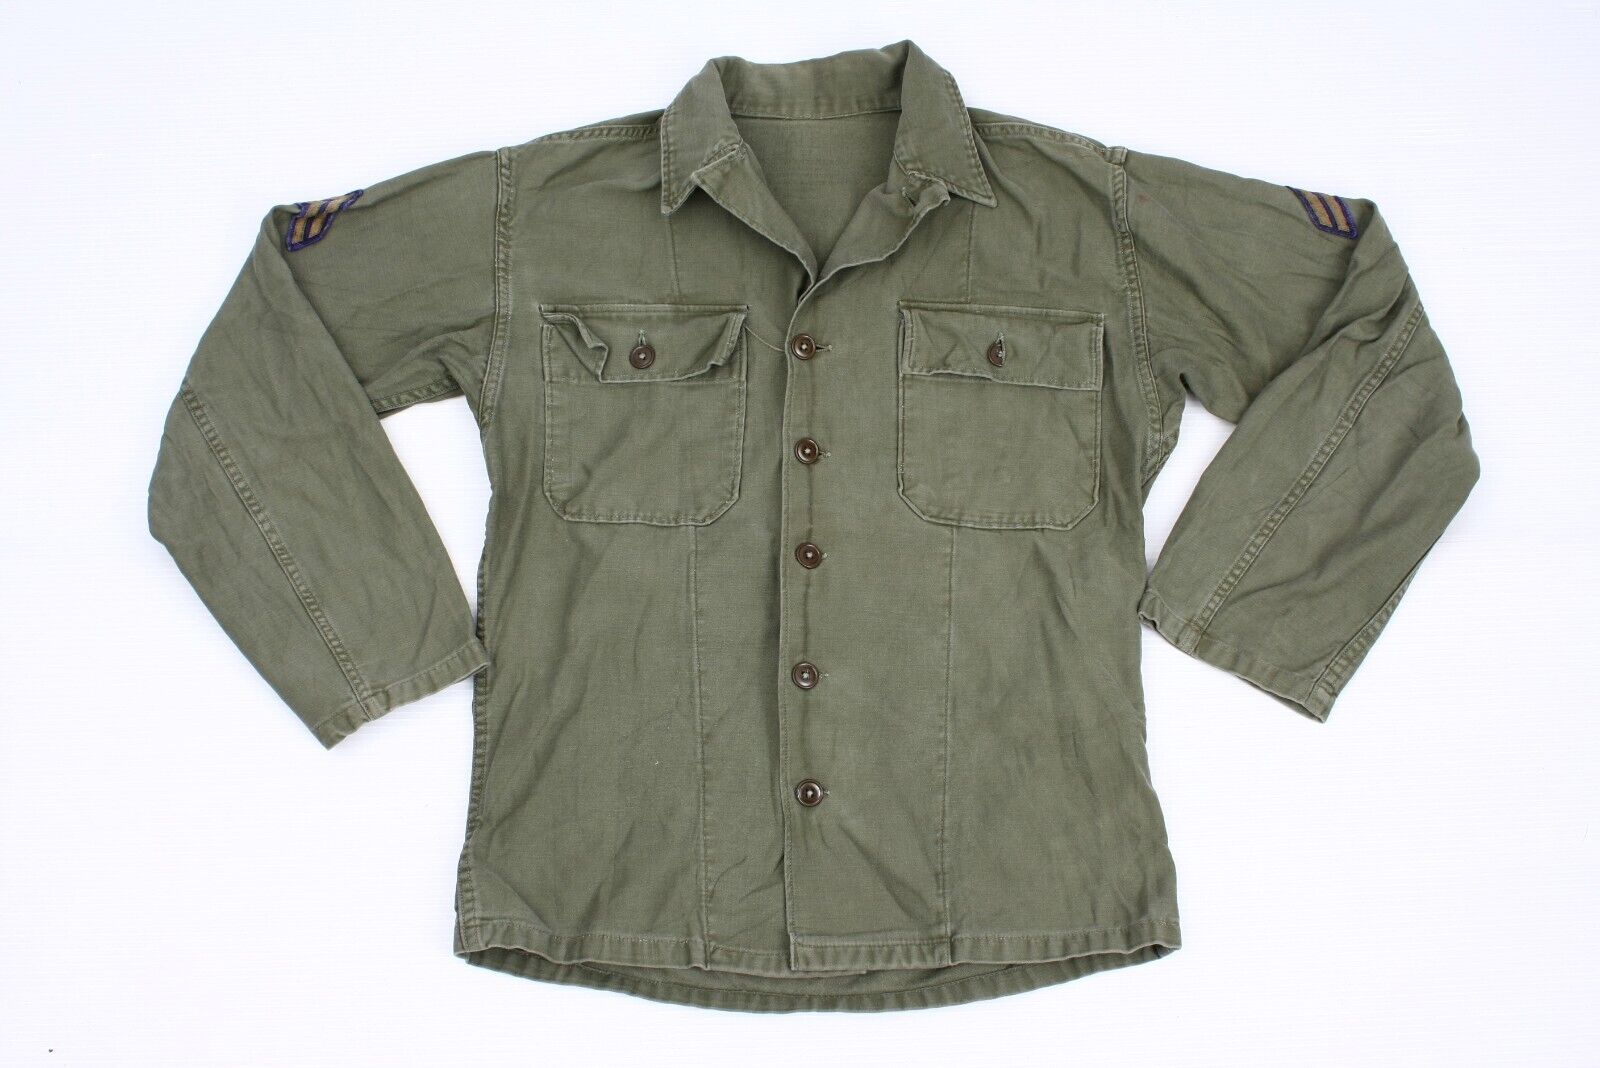 Vintage 50s 60s US Army OG-107 Sateen Shirt Type 1 Small Corporal Korea Vietnam